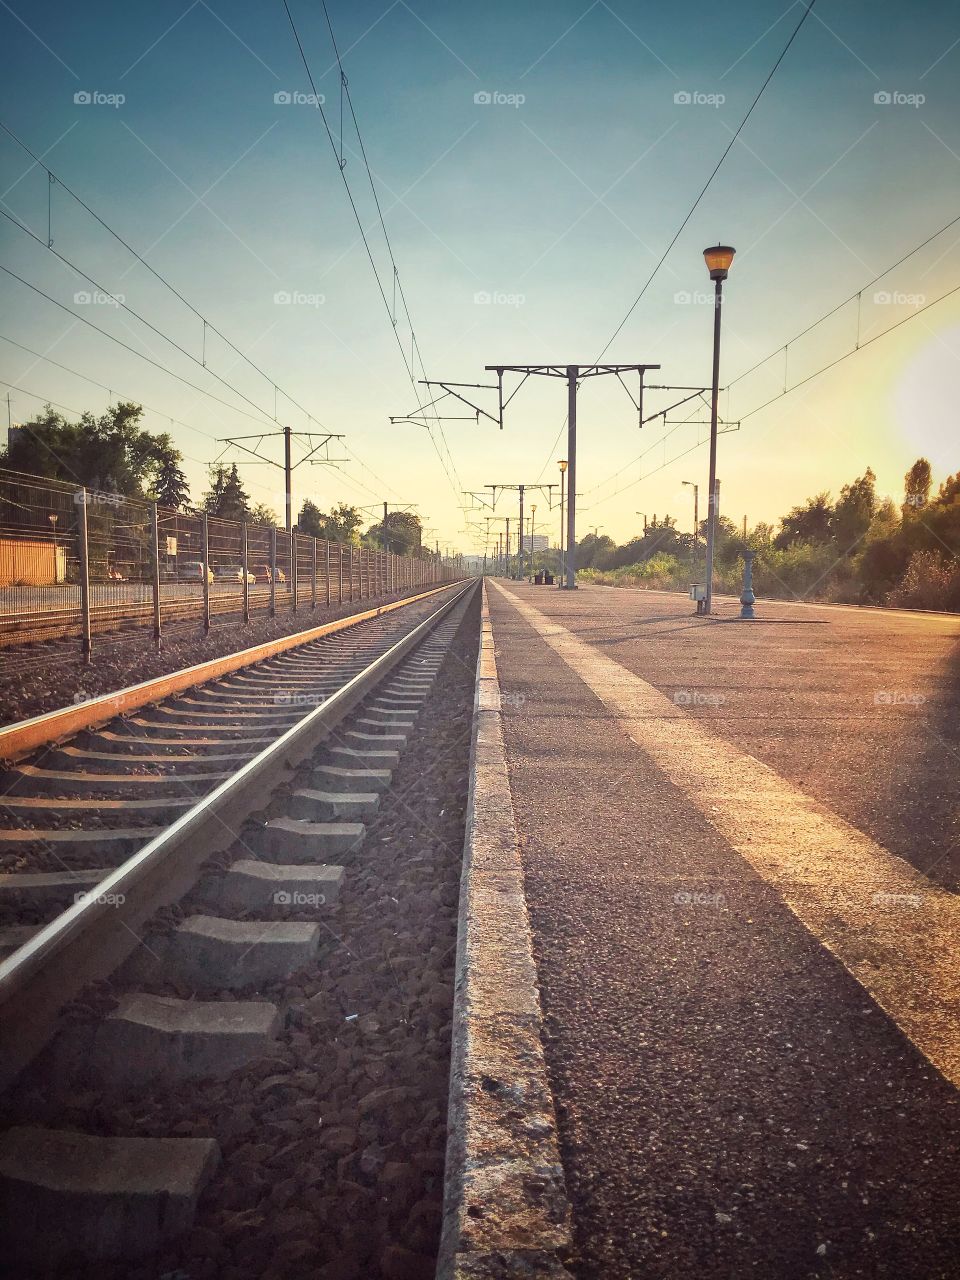 Train station at sunset